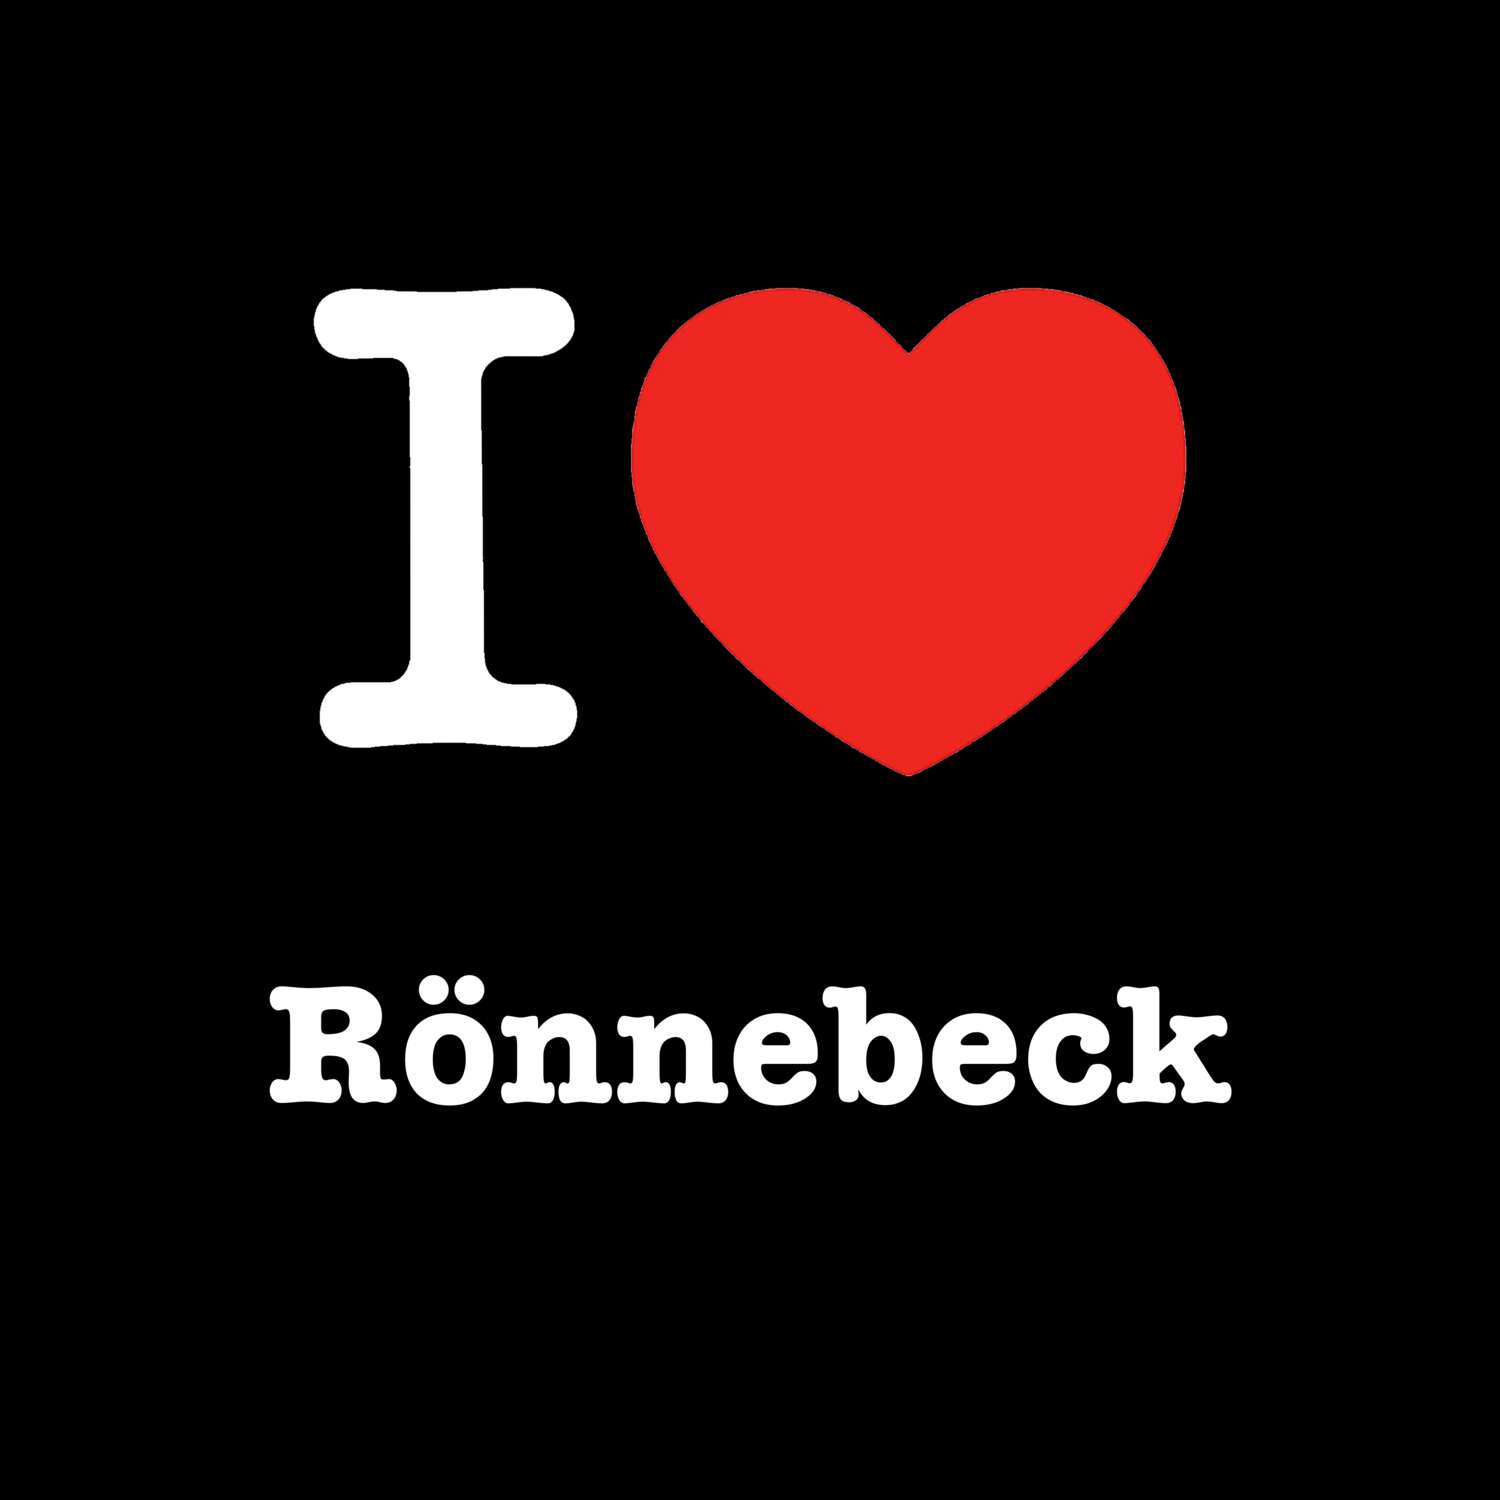 Rönnebeck T-Shirt »I love«